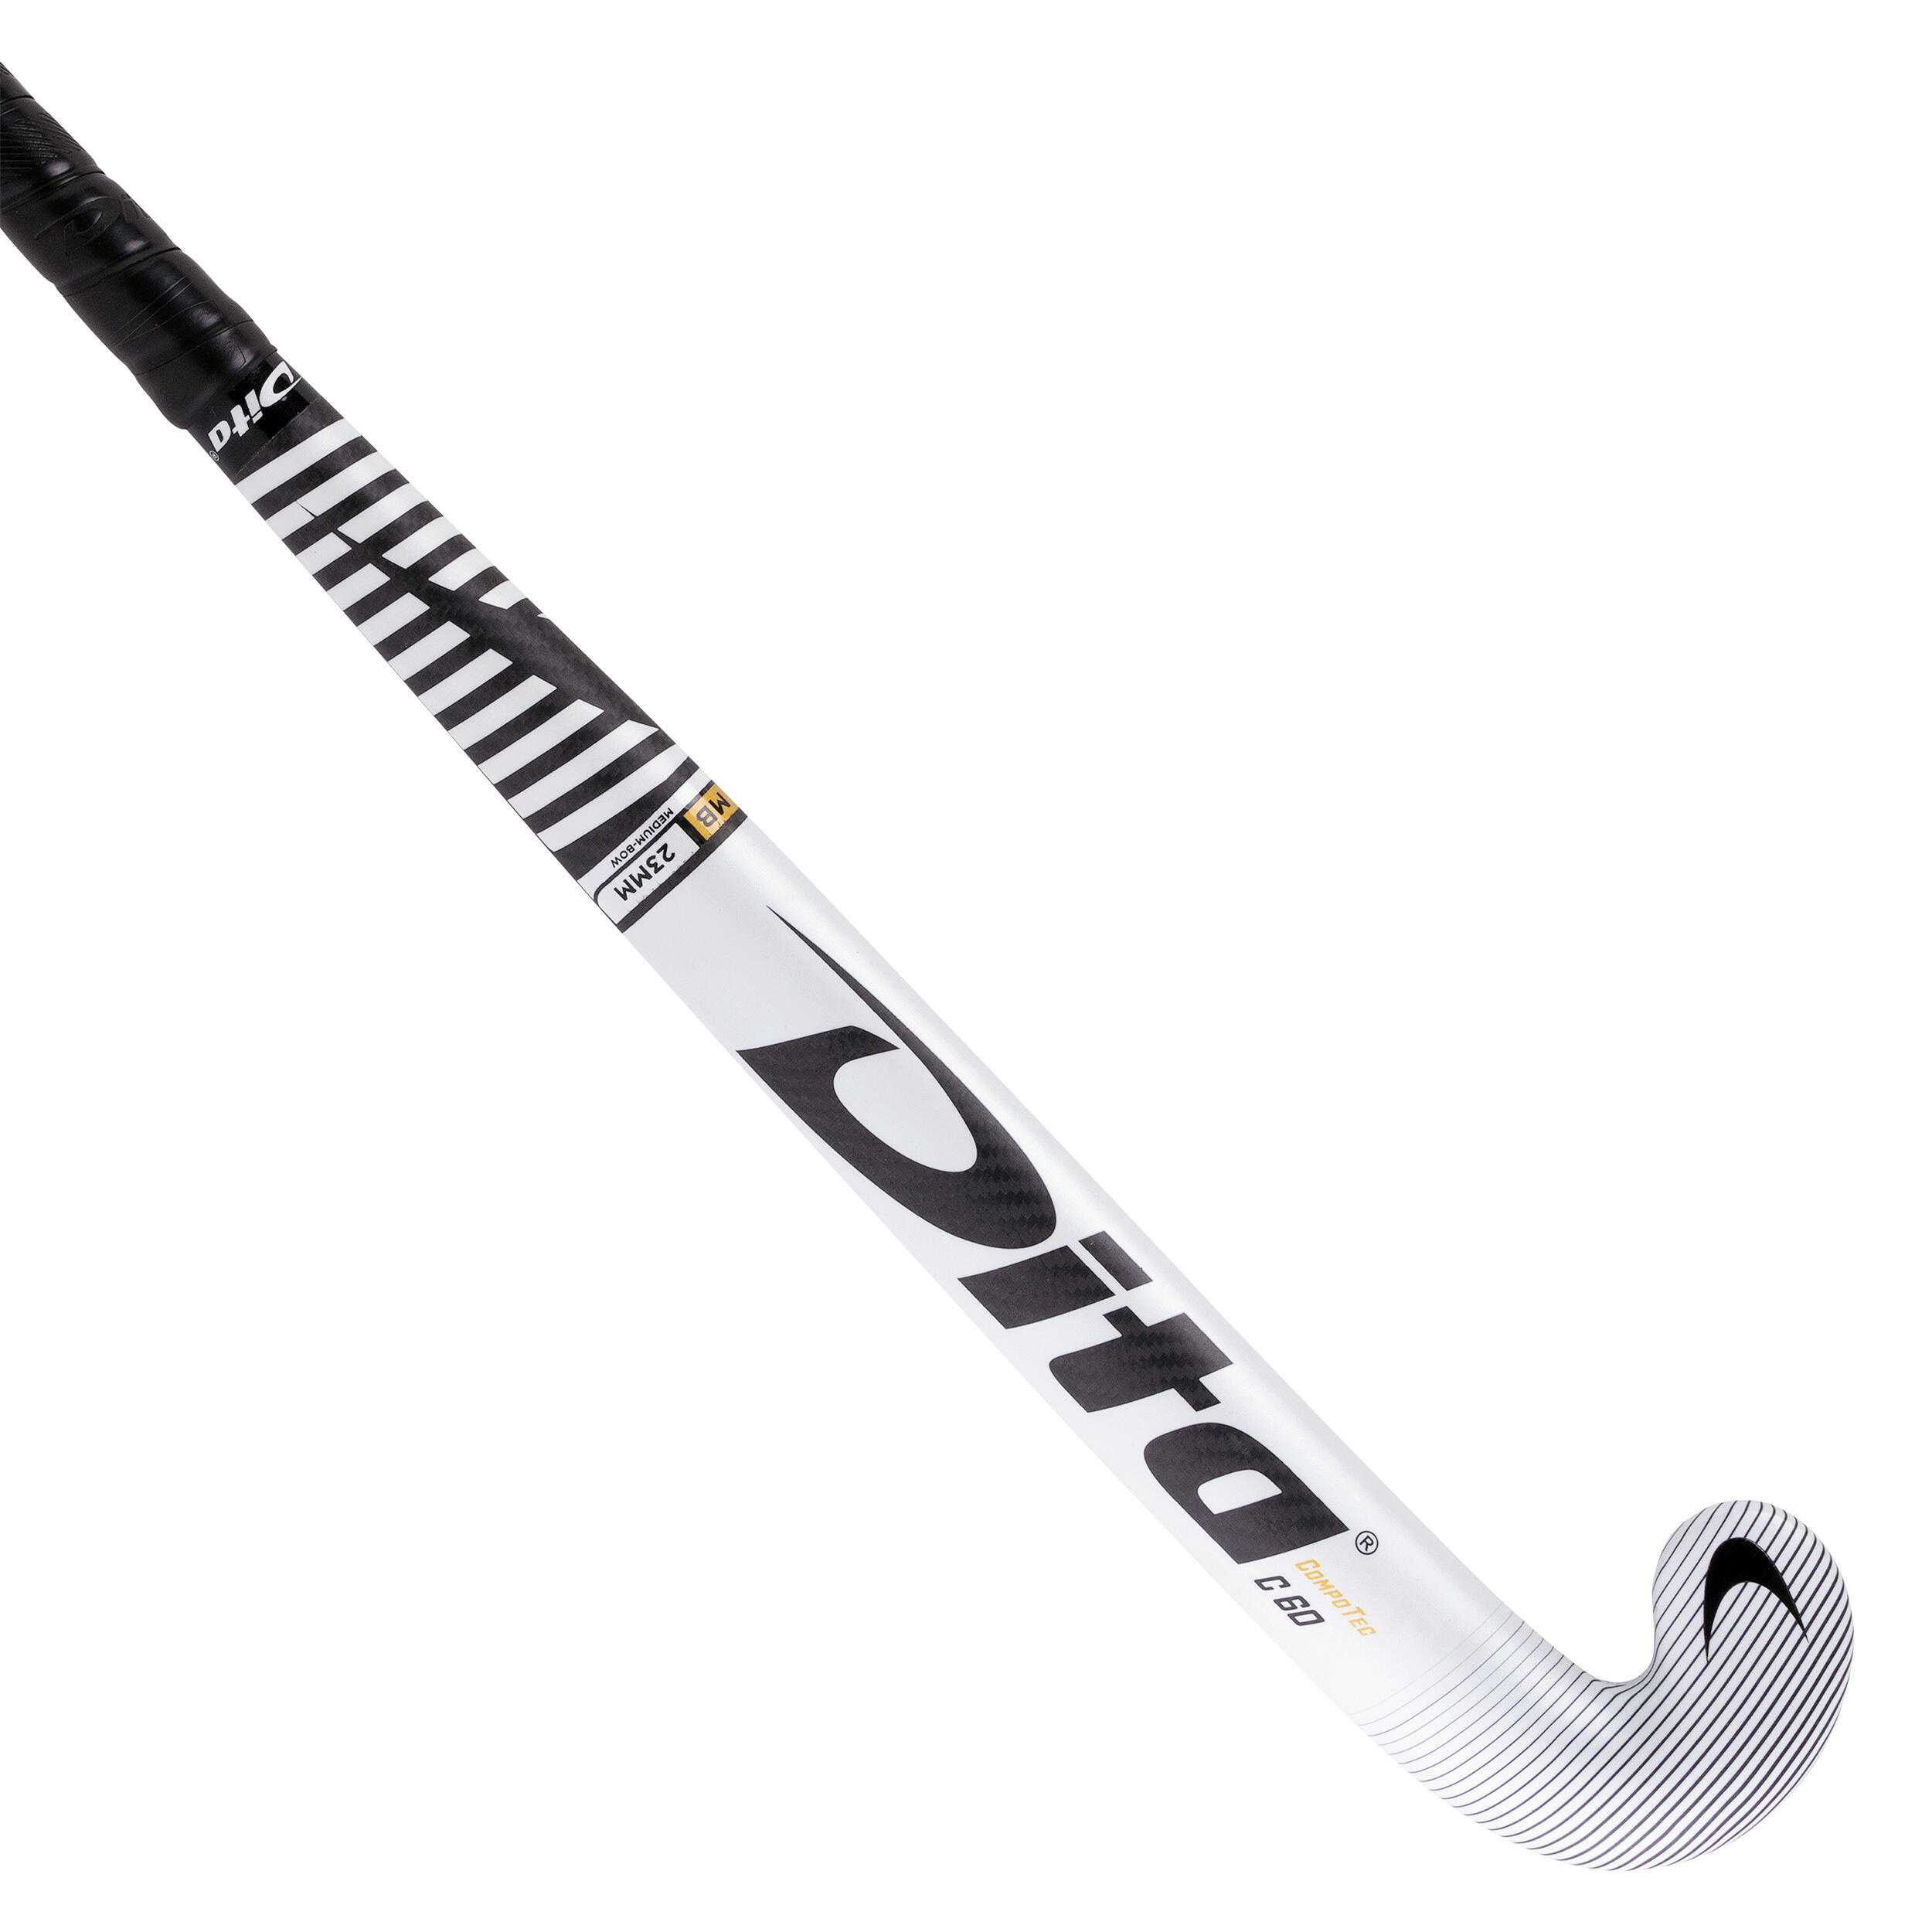 Adult Intermediate 60% Carbon Mid Bow Field Hockey Stick CompotecC60 - White/Black 1/12